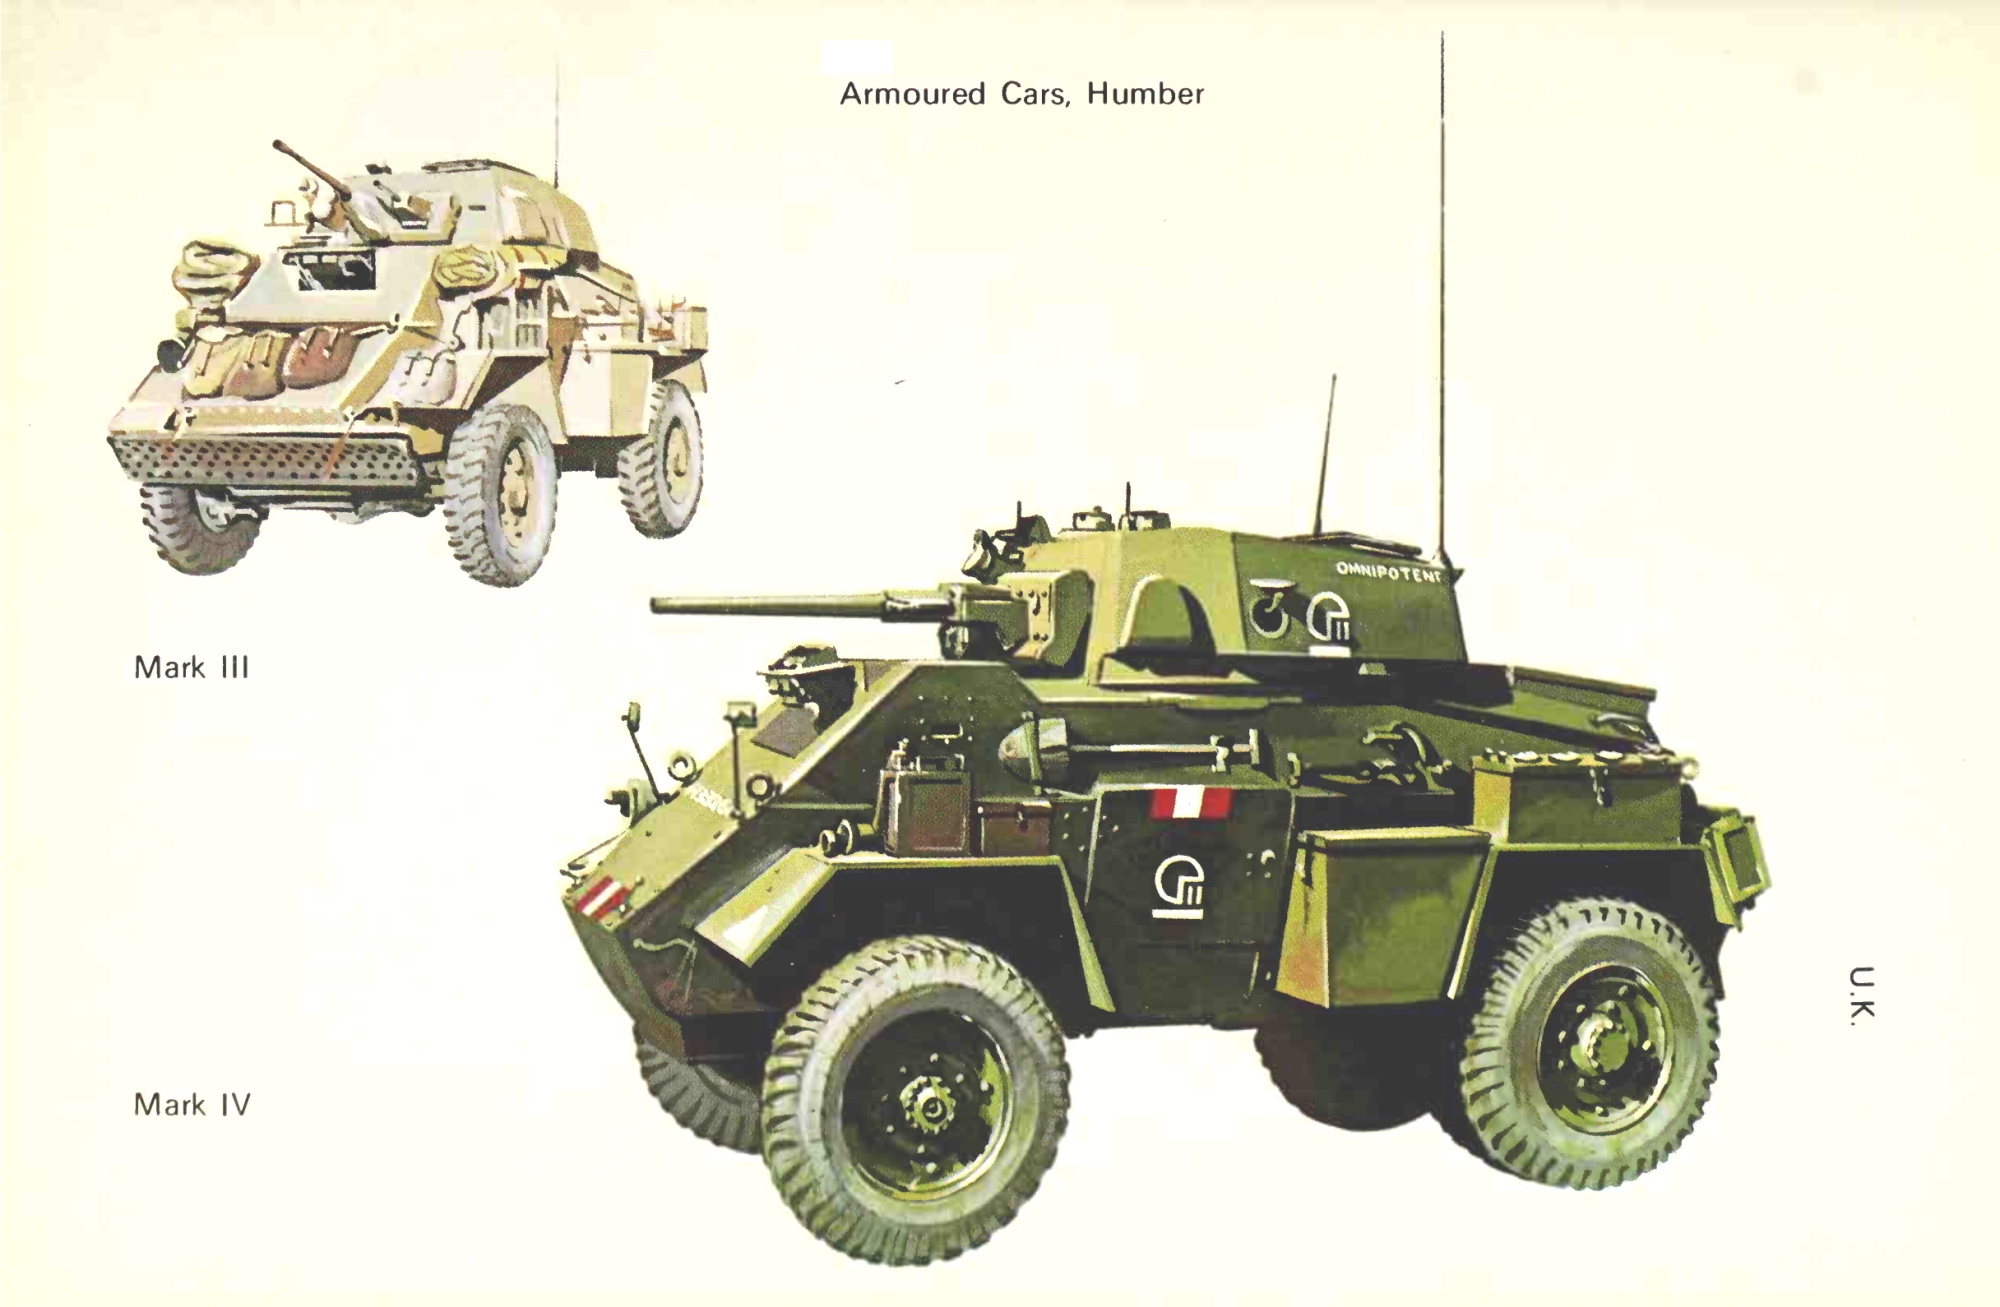 1706520272 165 Humber Armoured Cars